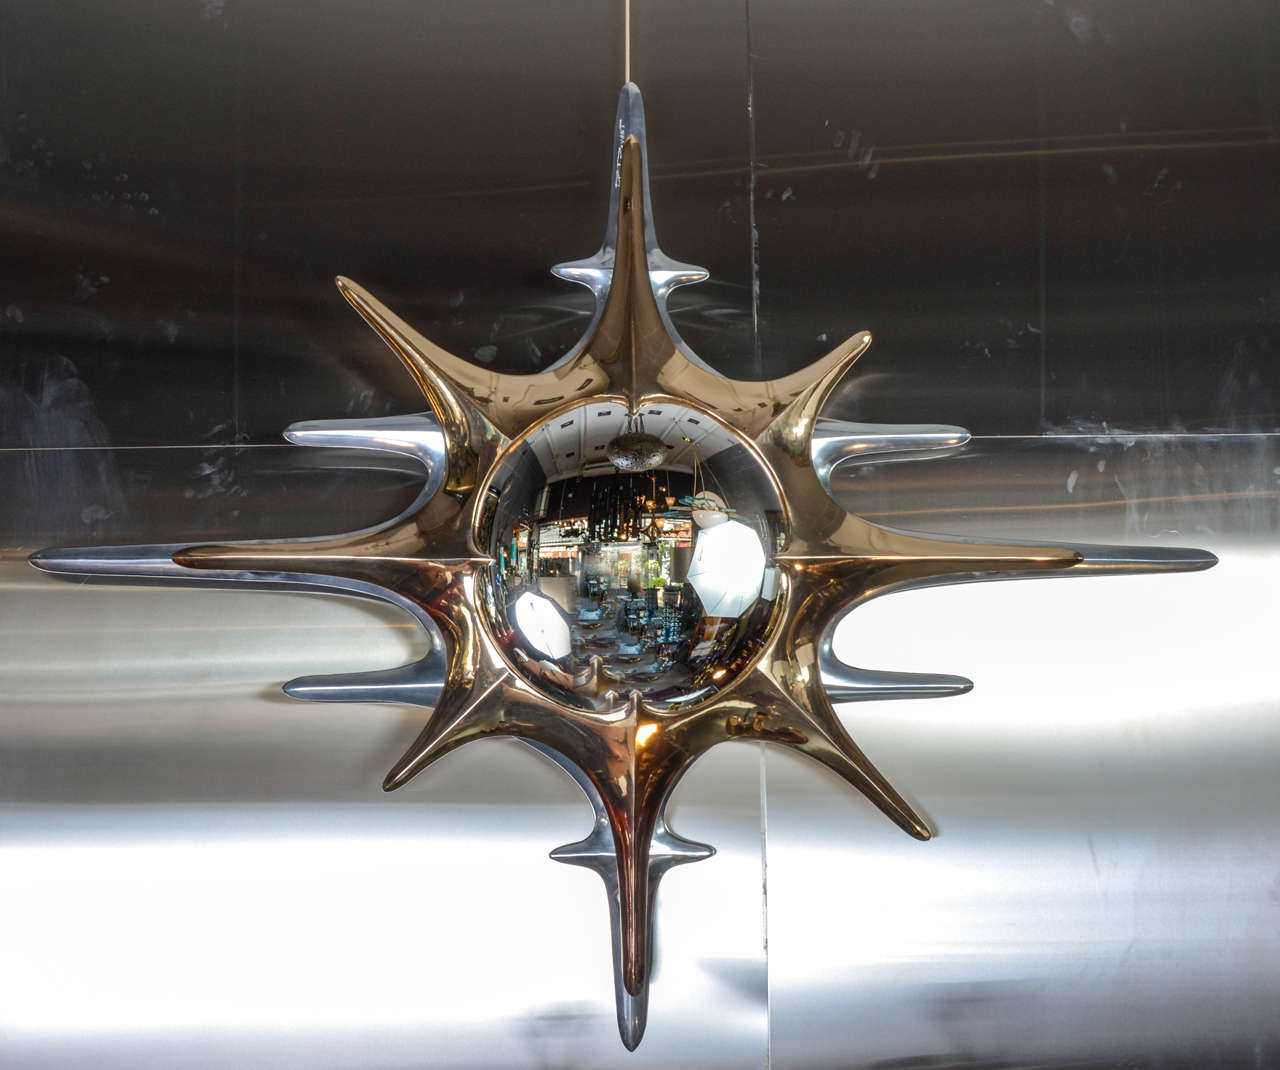 Sunburst convex mirror in cast aluminium and polished solid bronze.

numbered 1/ 25 exemplars.